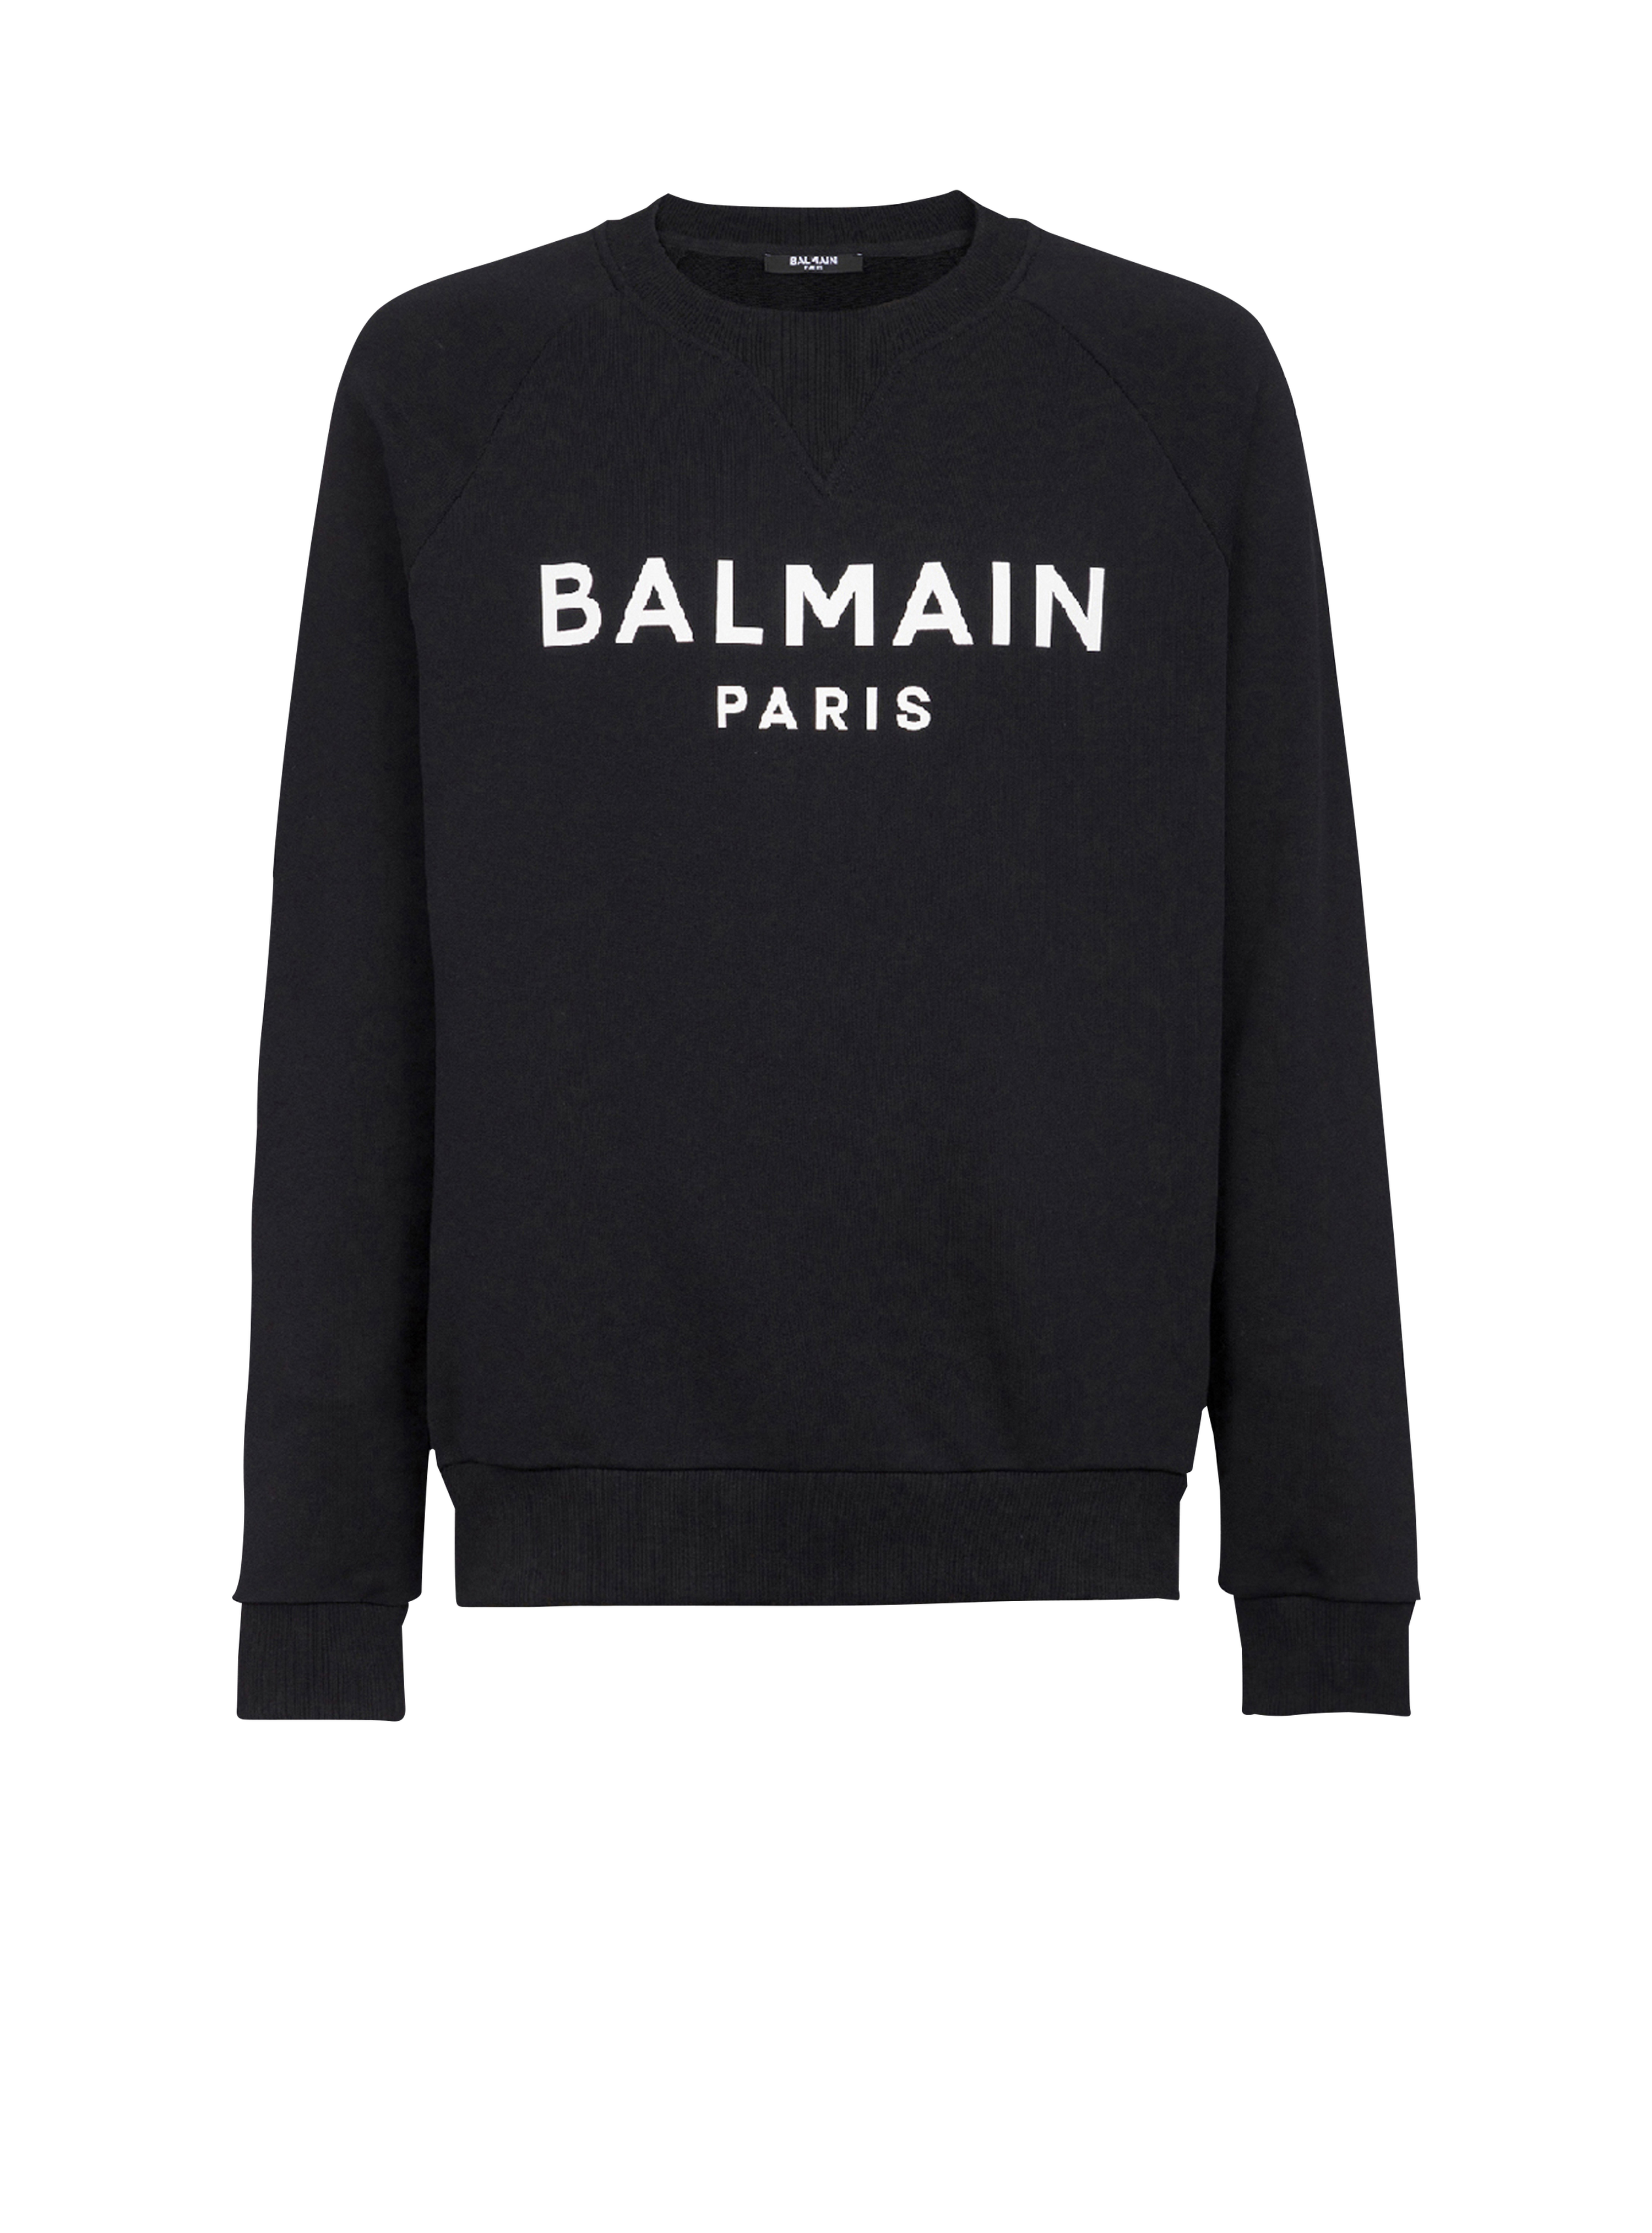 Eco-designed cotton sweatshirt with Balmain Paris metallic logo print, black